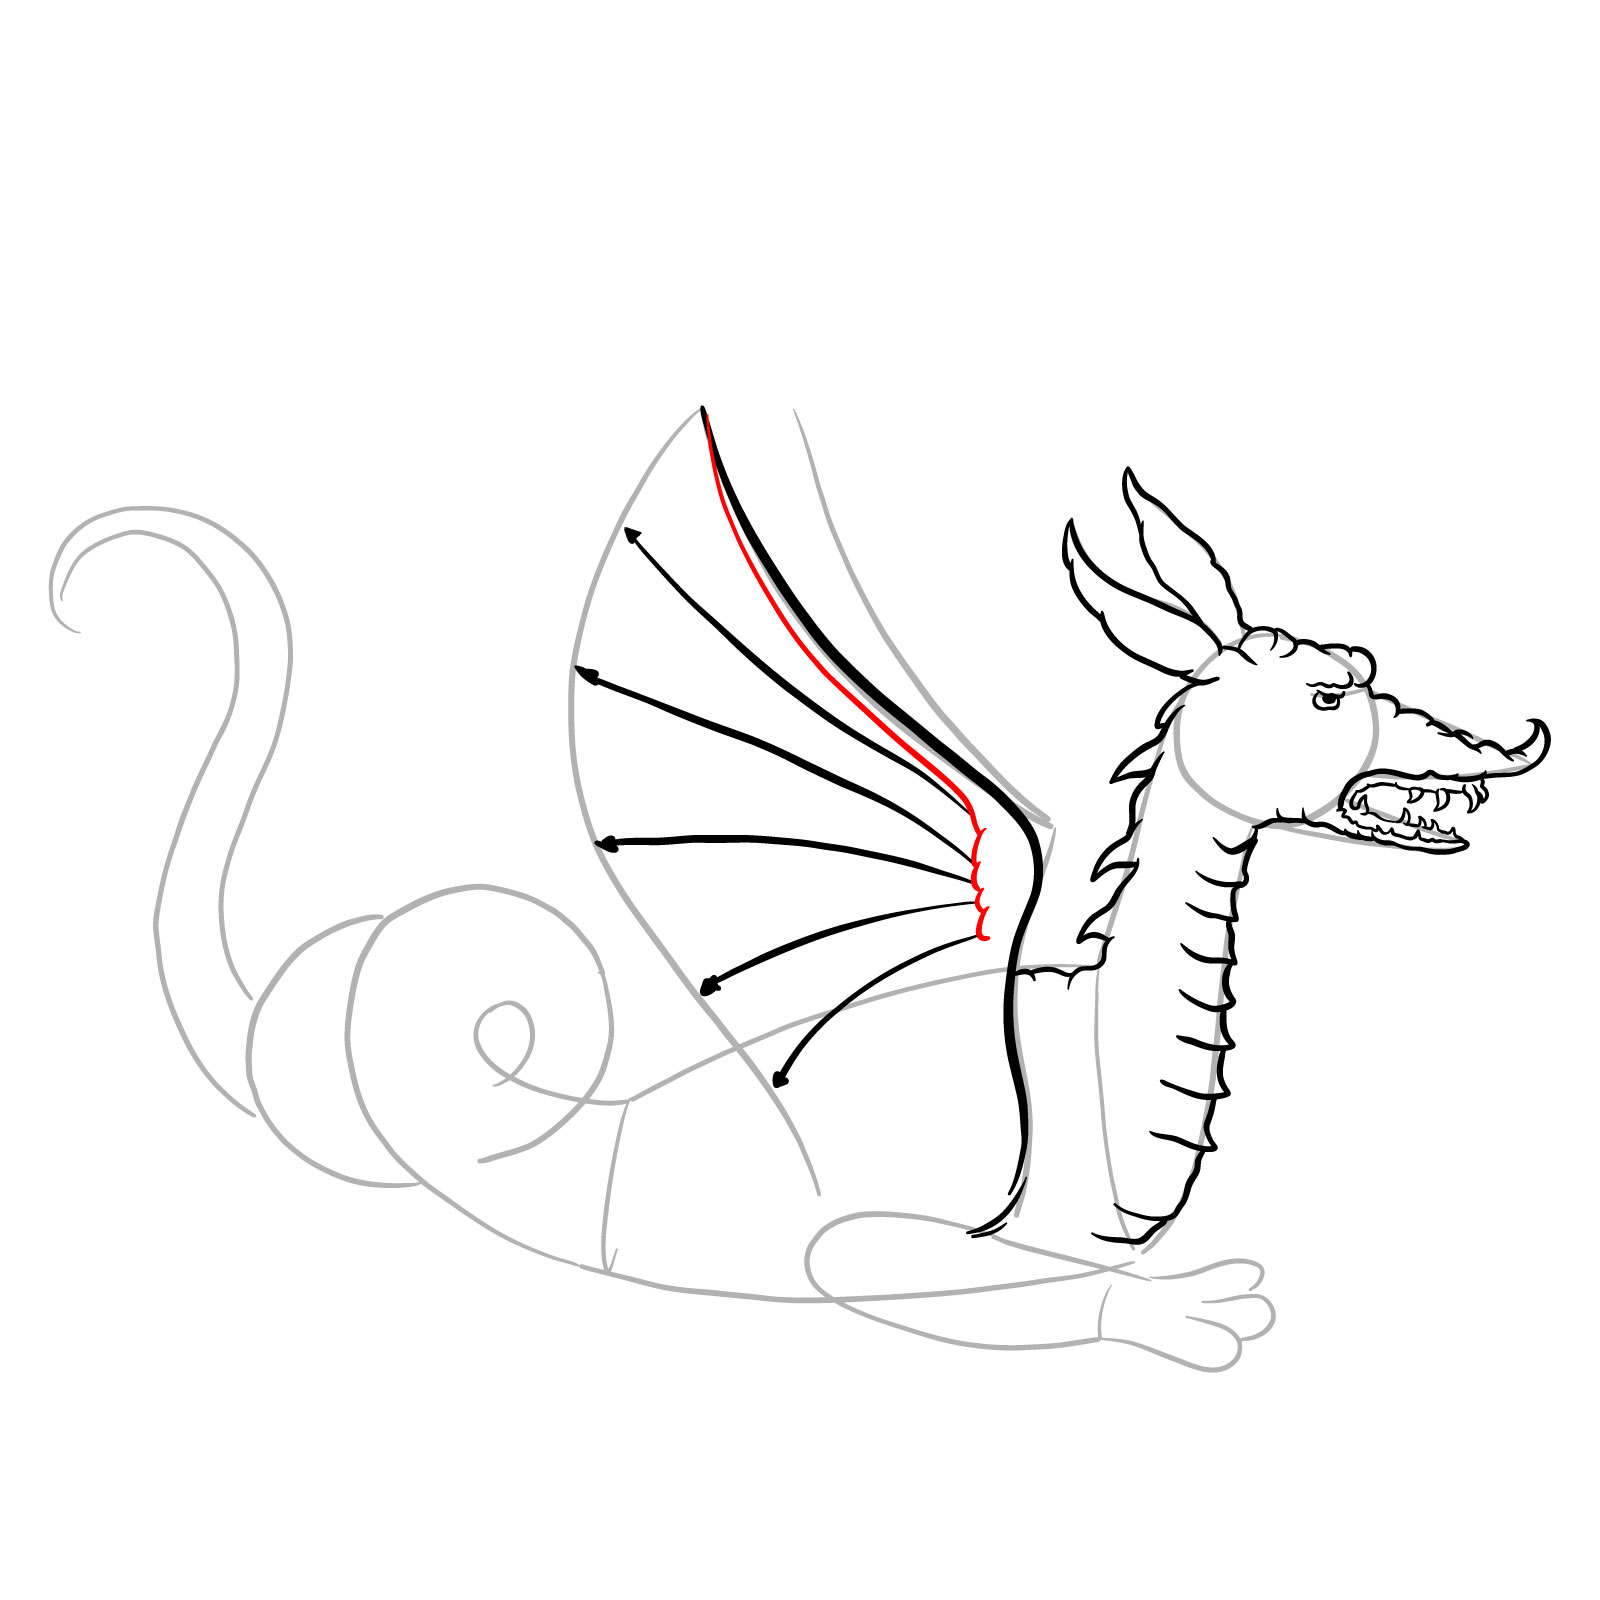 How to draw a Knucker dragon - step 14